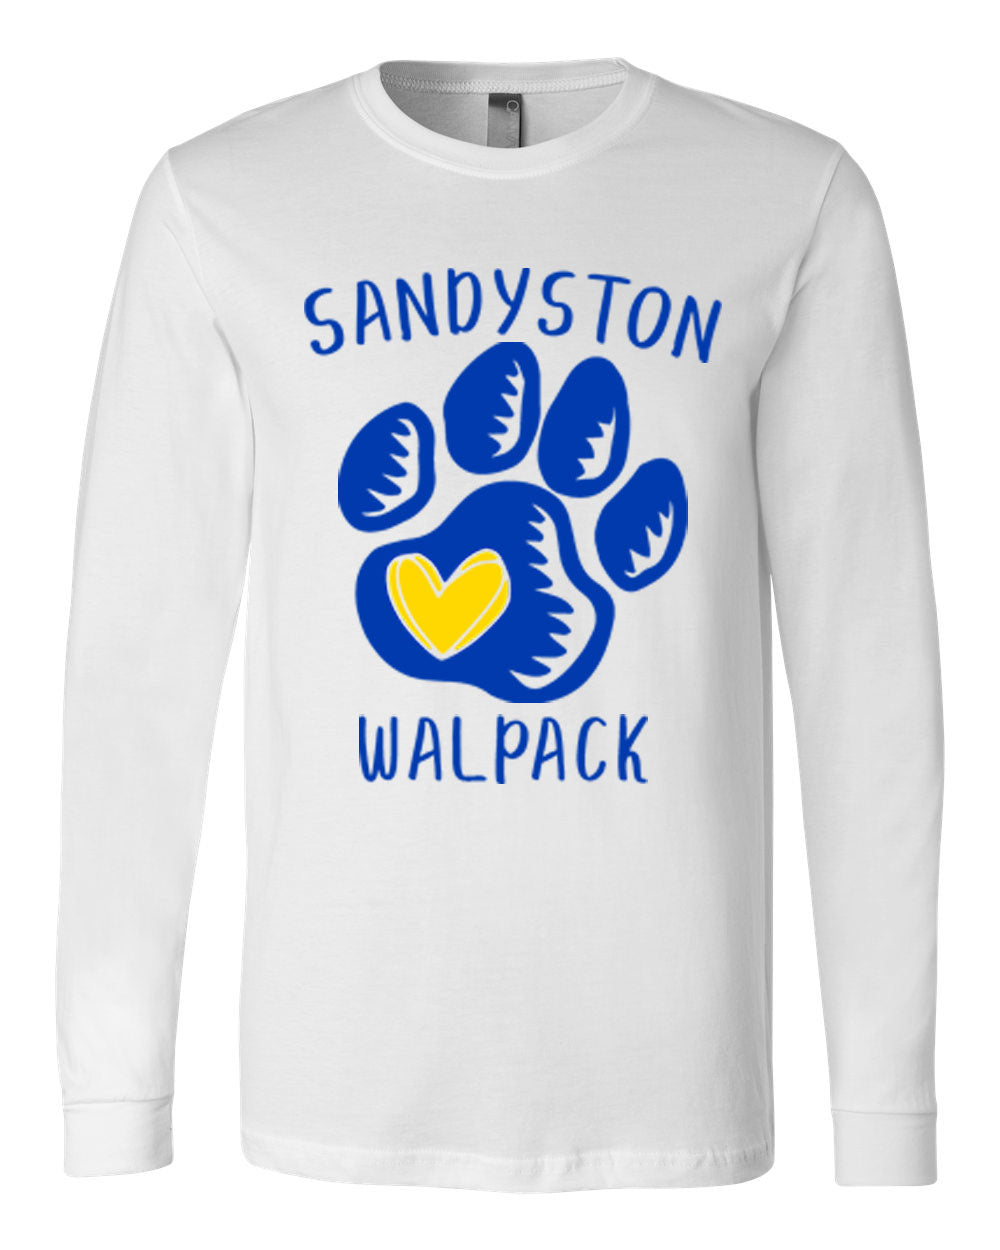 Sandyston Walpack Design 1 Long Sleeve Shirt